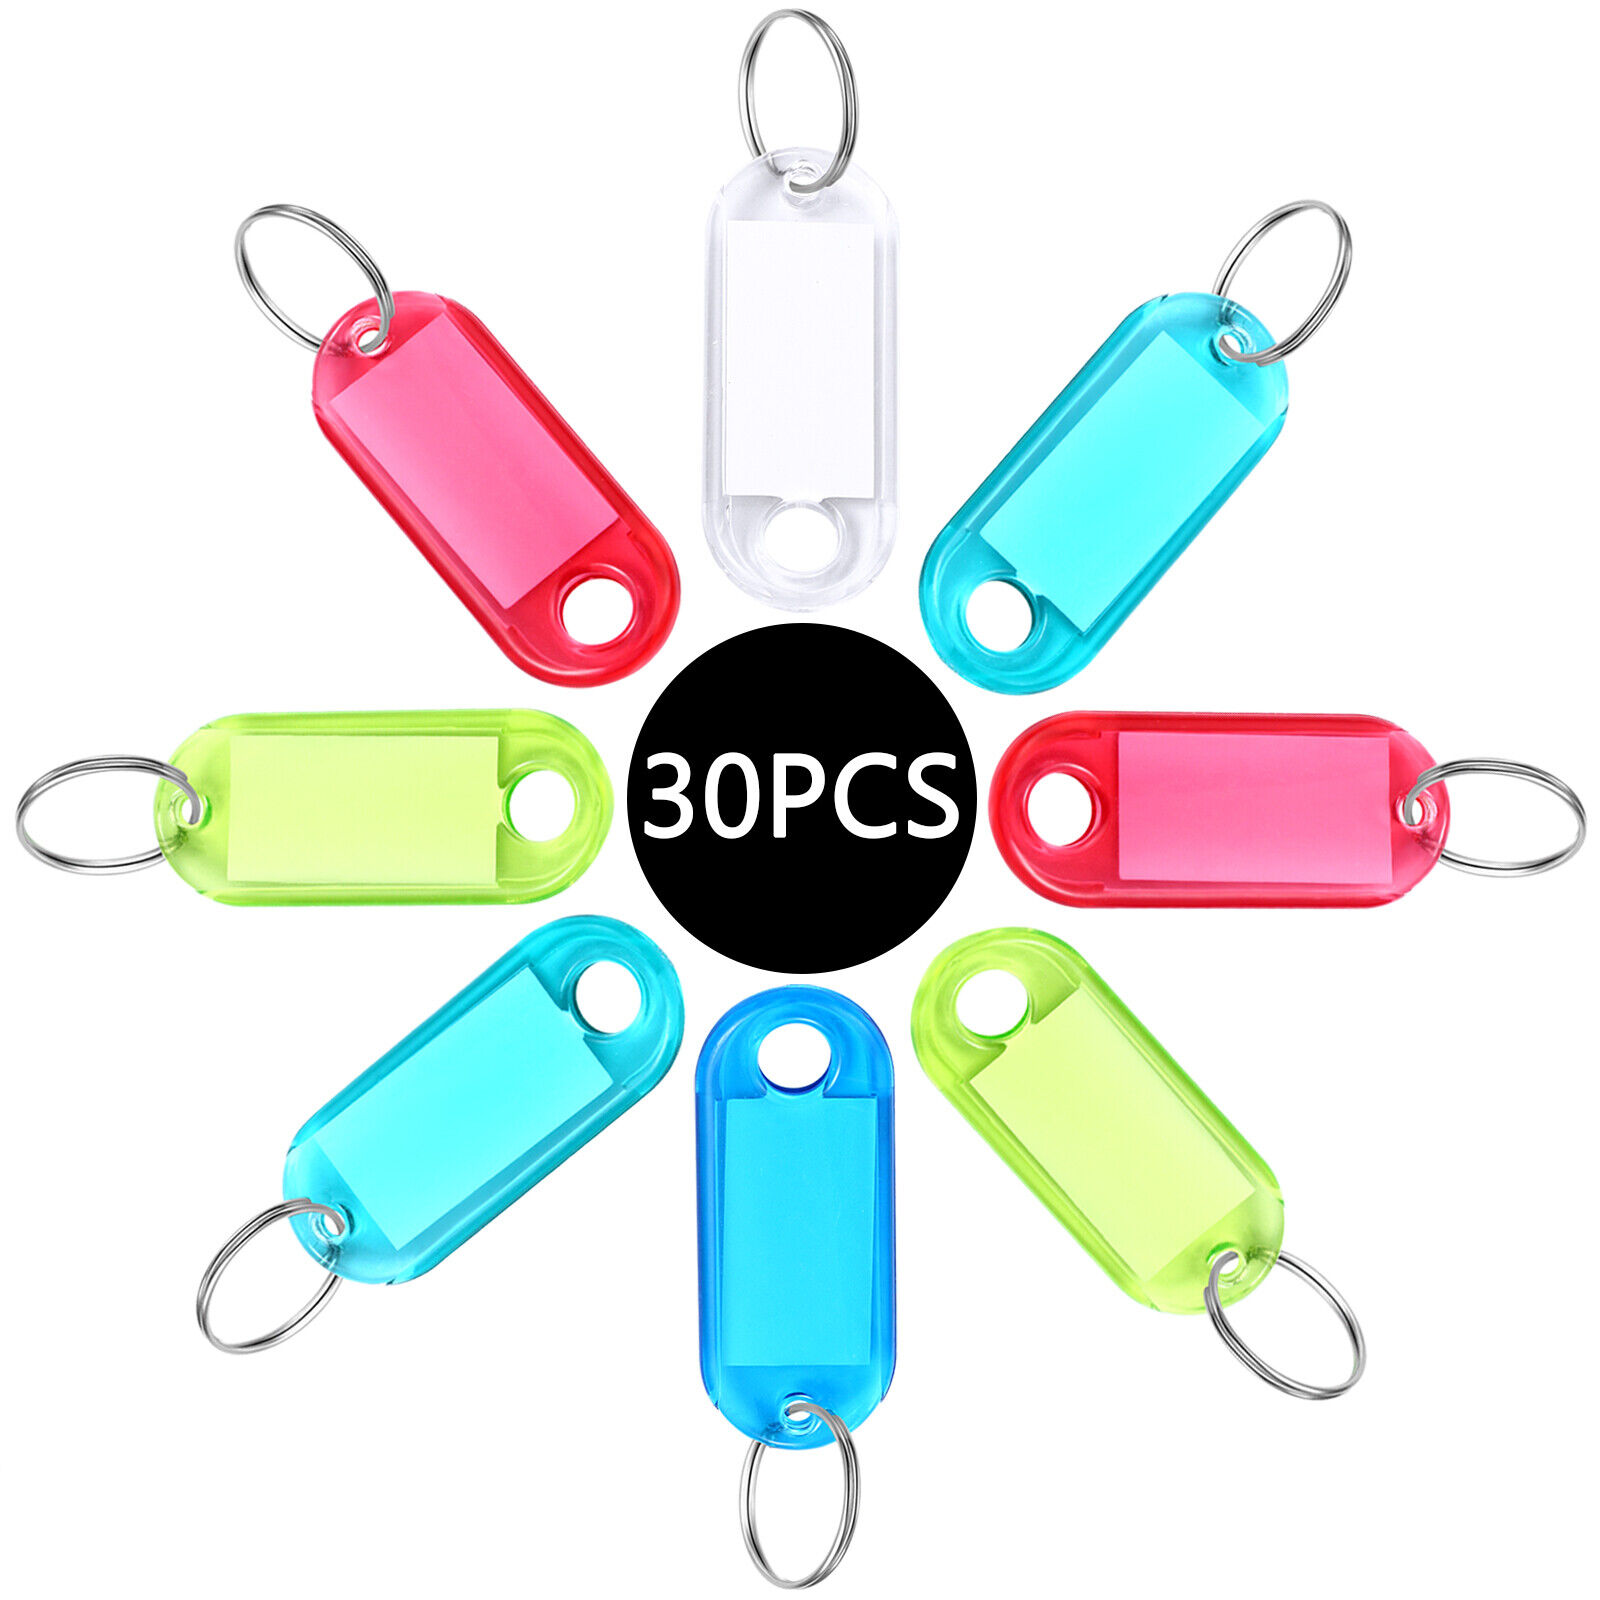 30pcs Plastic Key Tags with Split Ring Label Window Luggage Bag ID Name Keychain